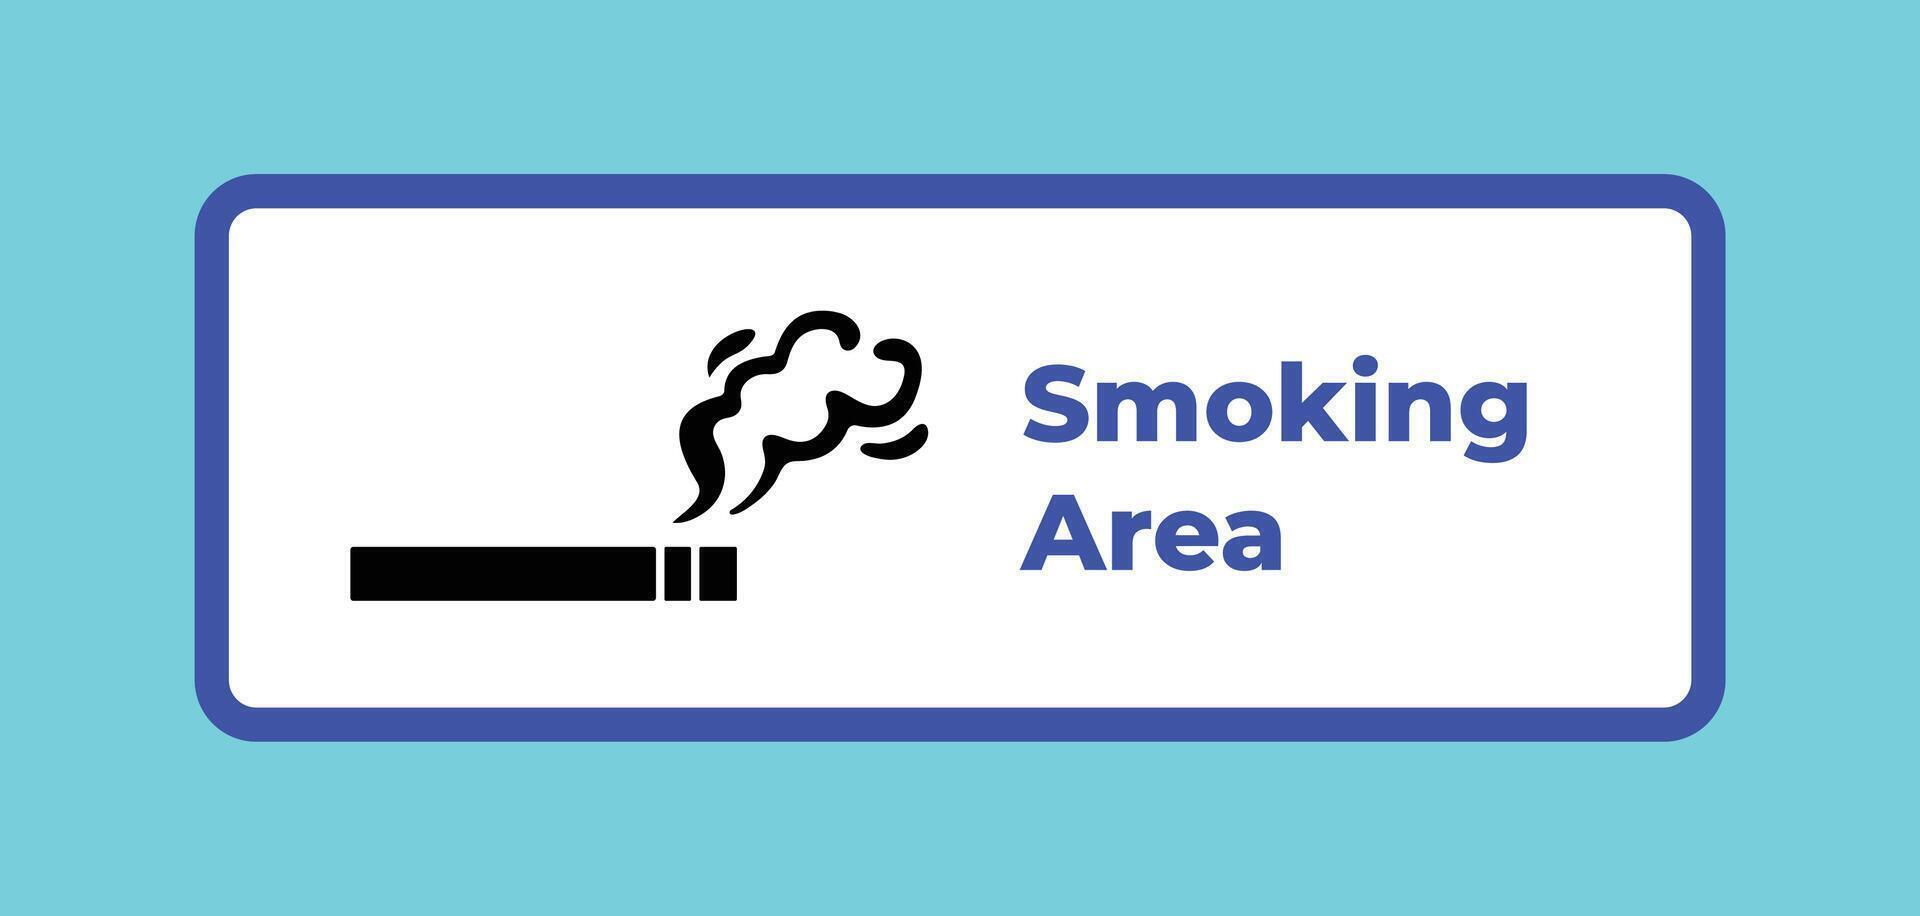 designado de fumar zona cigarrillo firmar años póster o pegatina diseño ilustración silueta aislado en horizontal azul y blanco antecedentes. vector